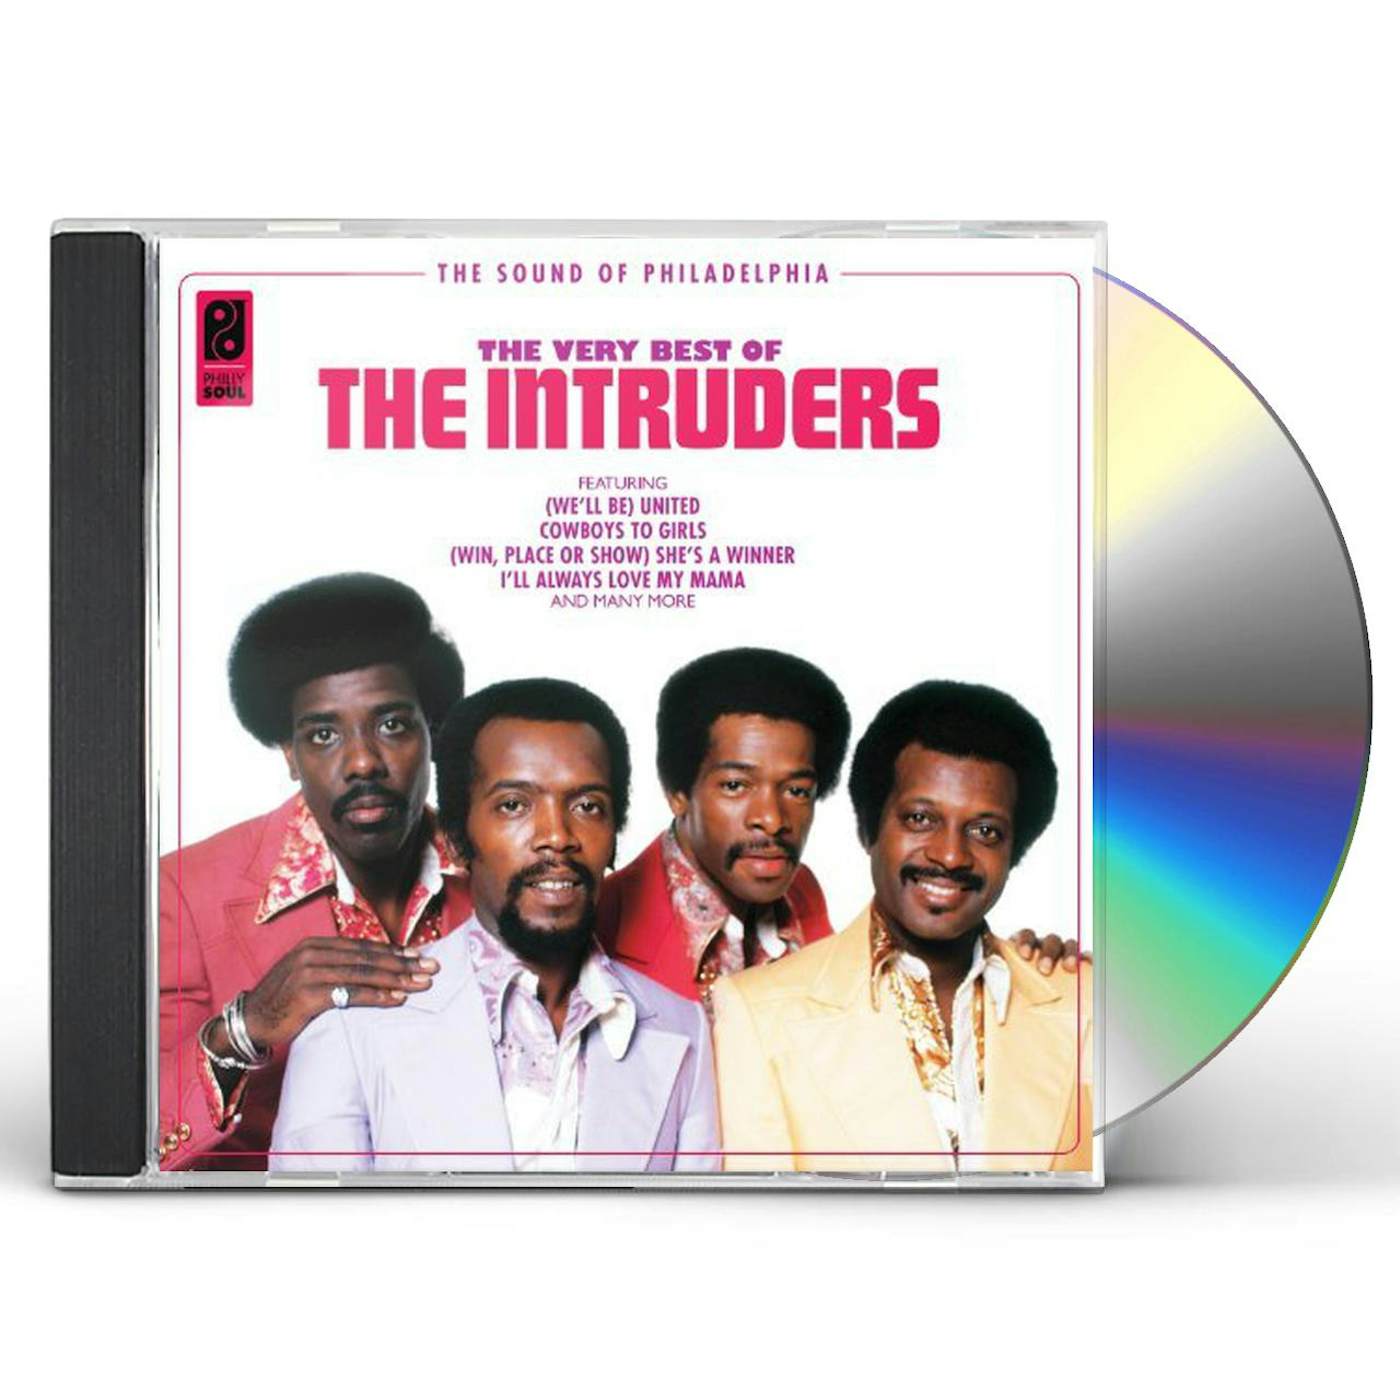 The Intruders - I'll Always Love My Mama lyrics 